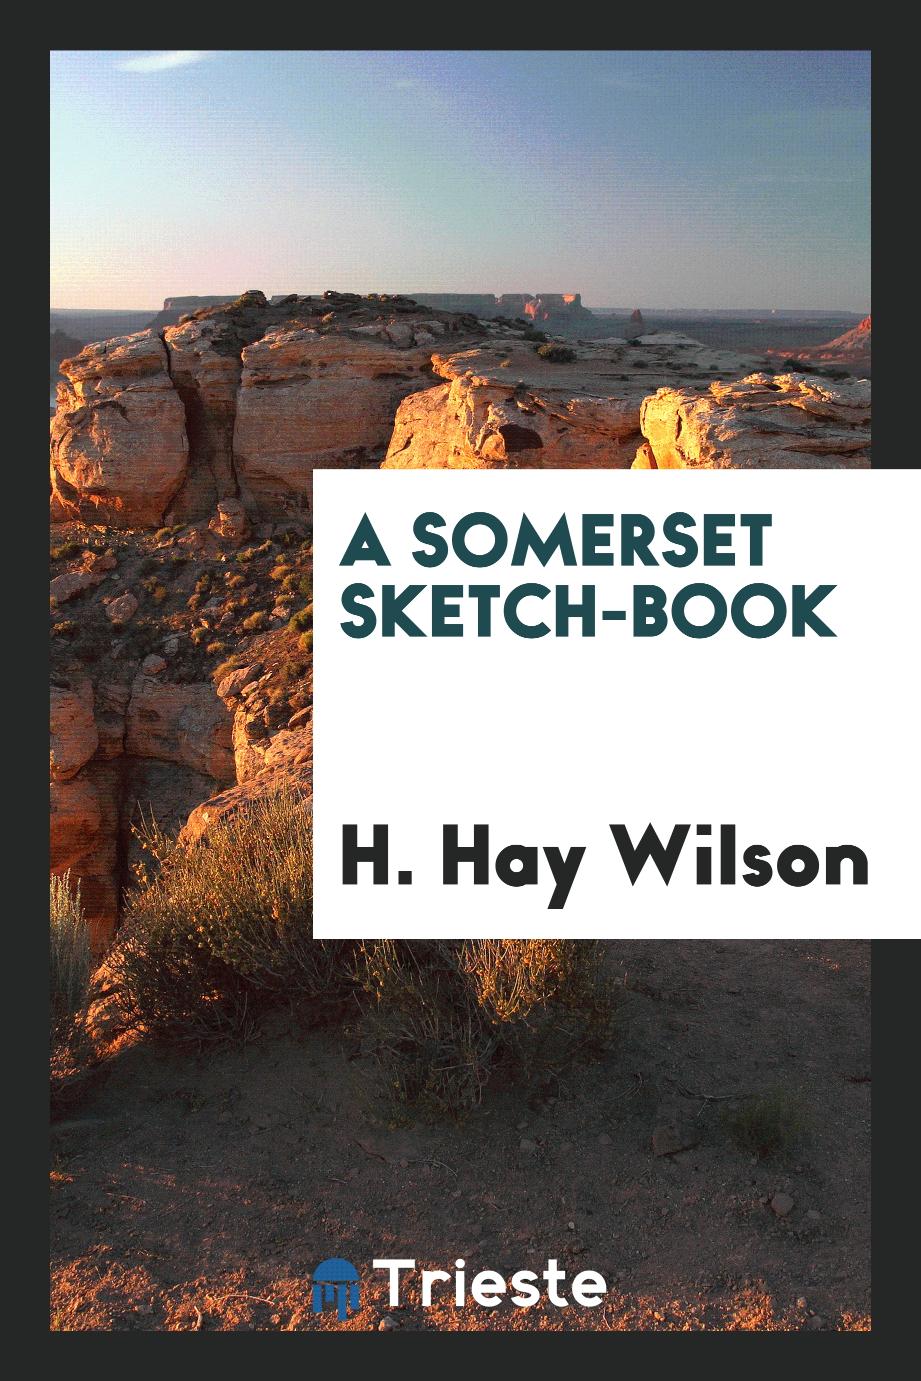 A Somerset sketch-book